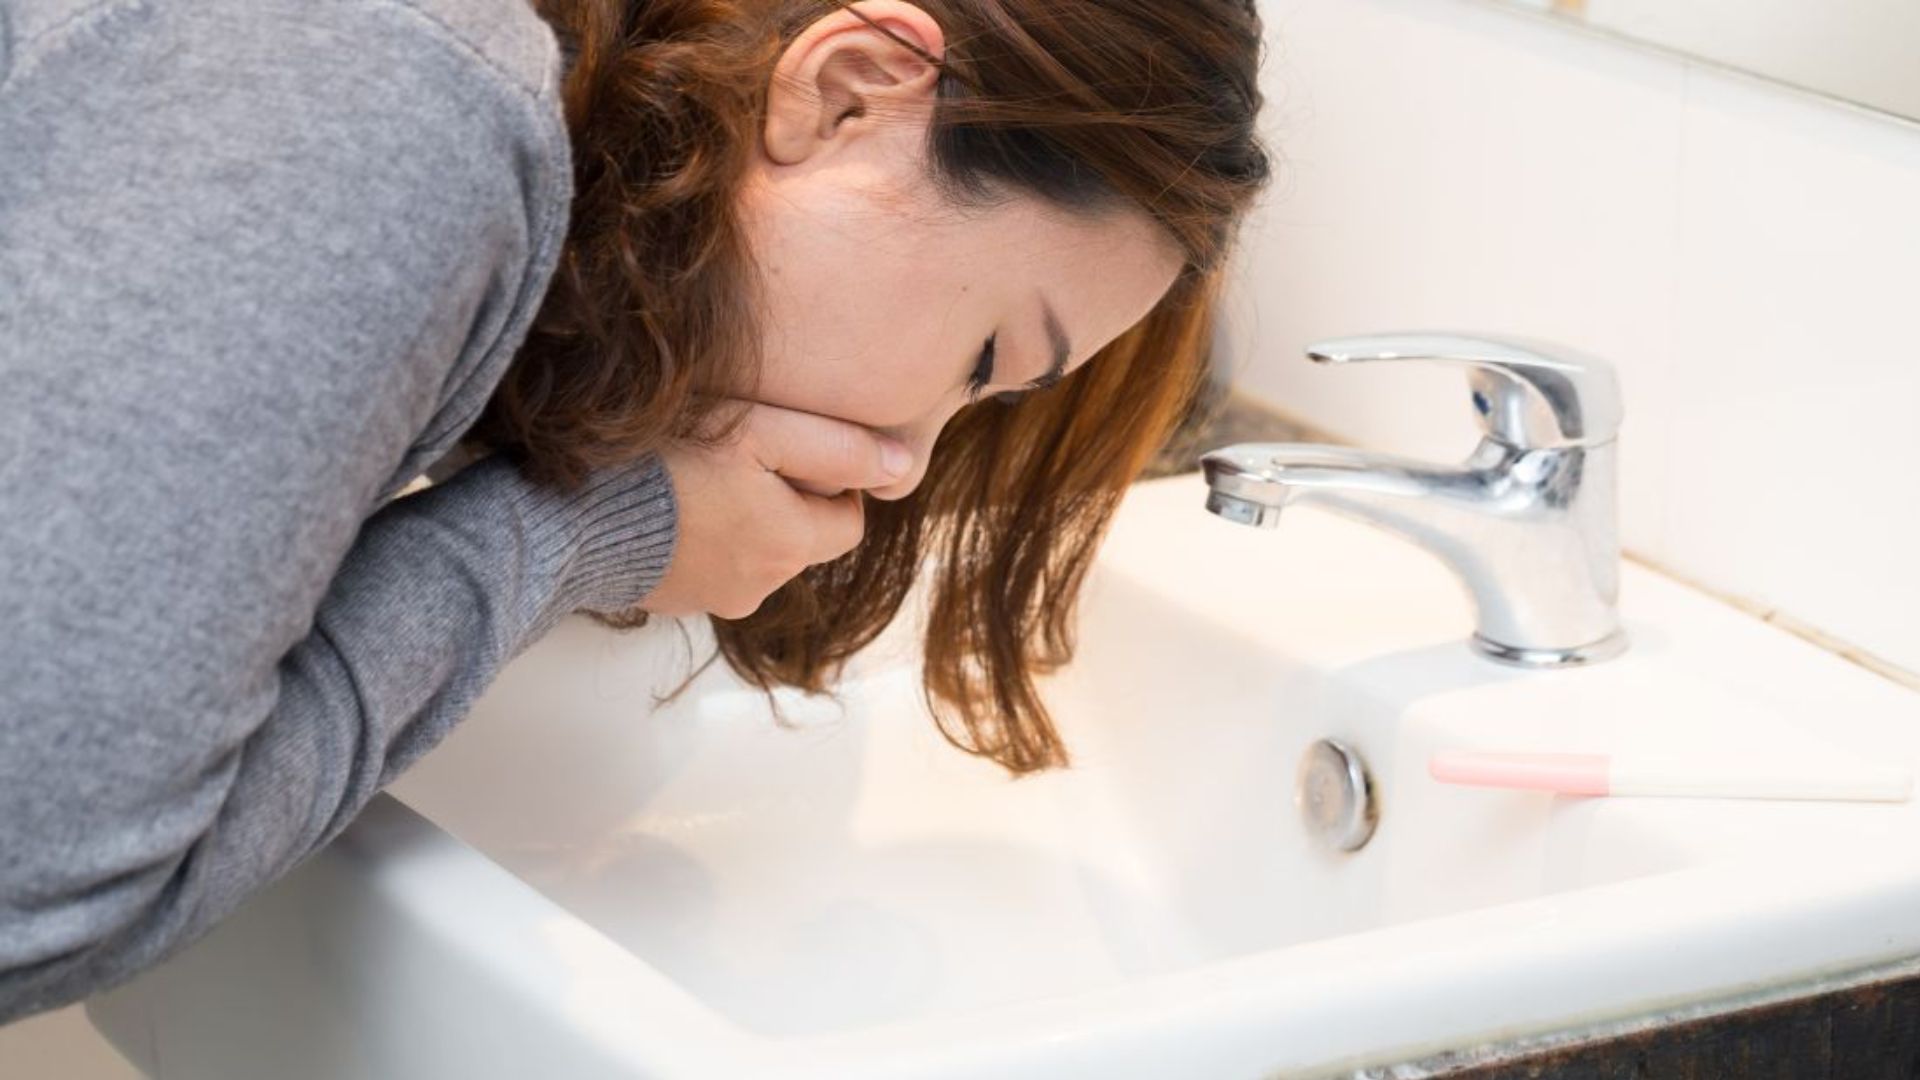 A Woman Vomiting On Wash Basin